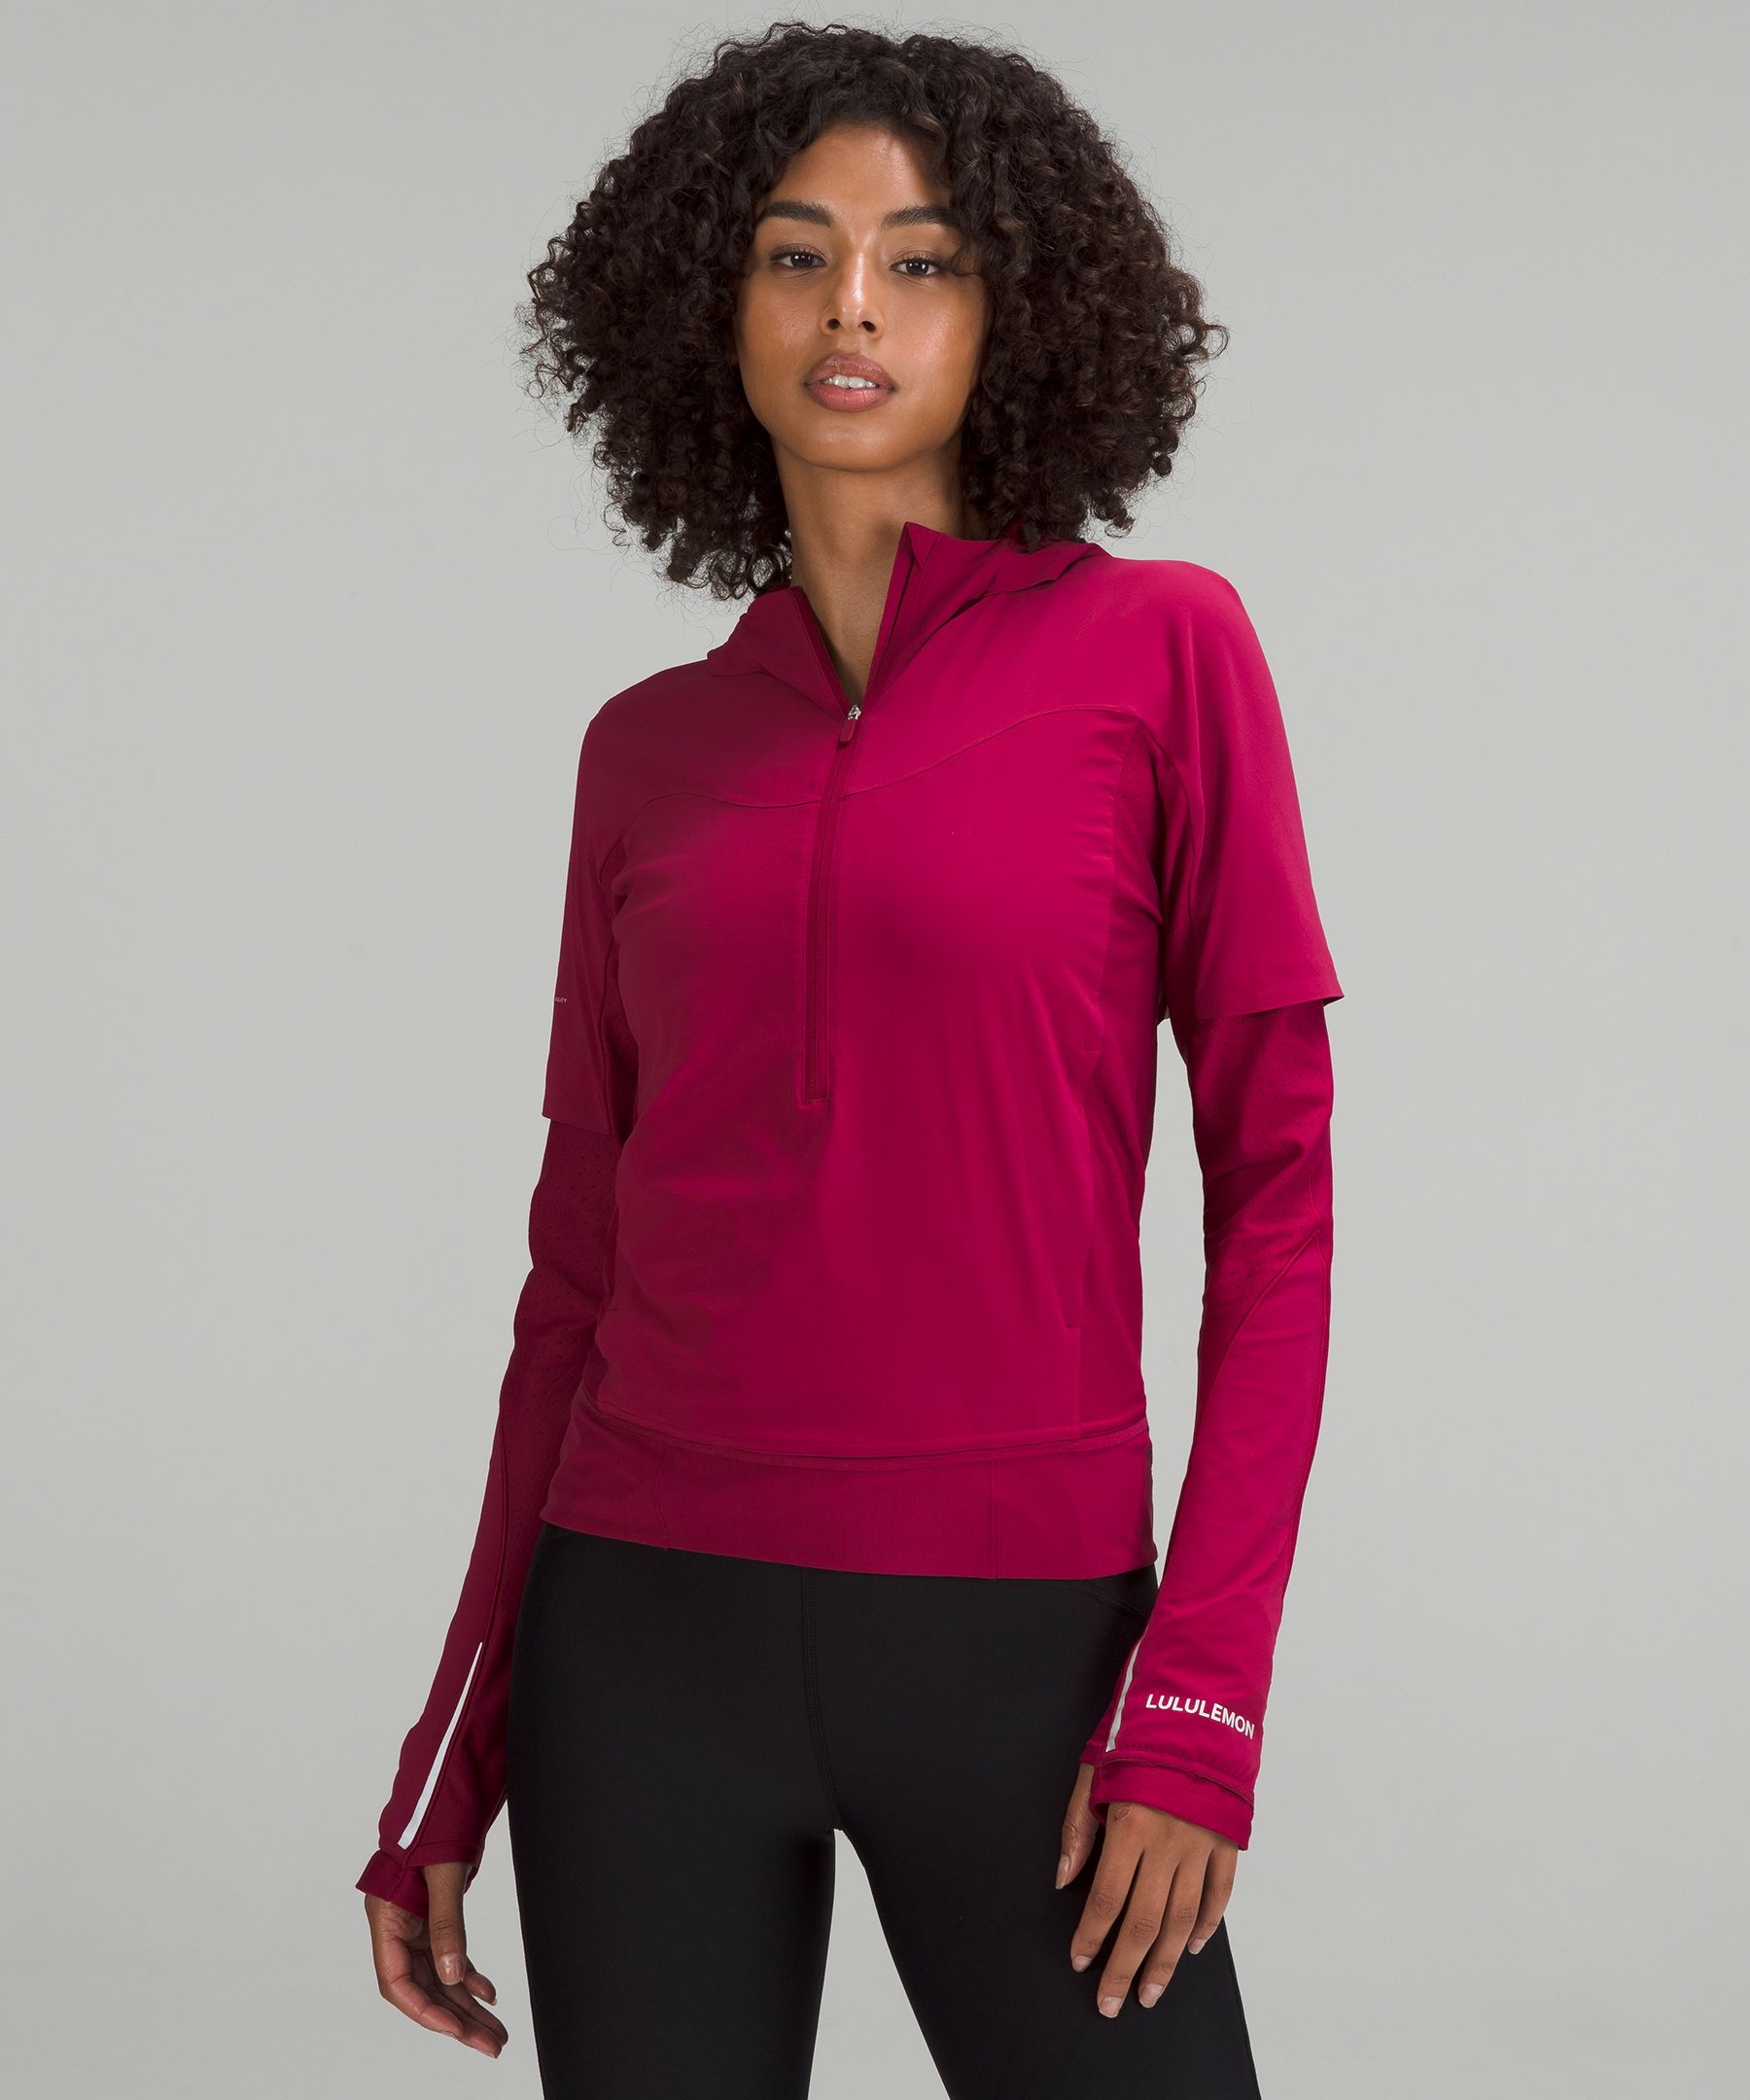 SenseKnit Composite Running Jacket | Women's Coats & Jackets | lululemon